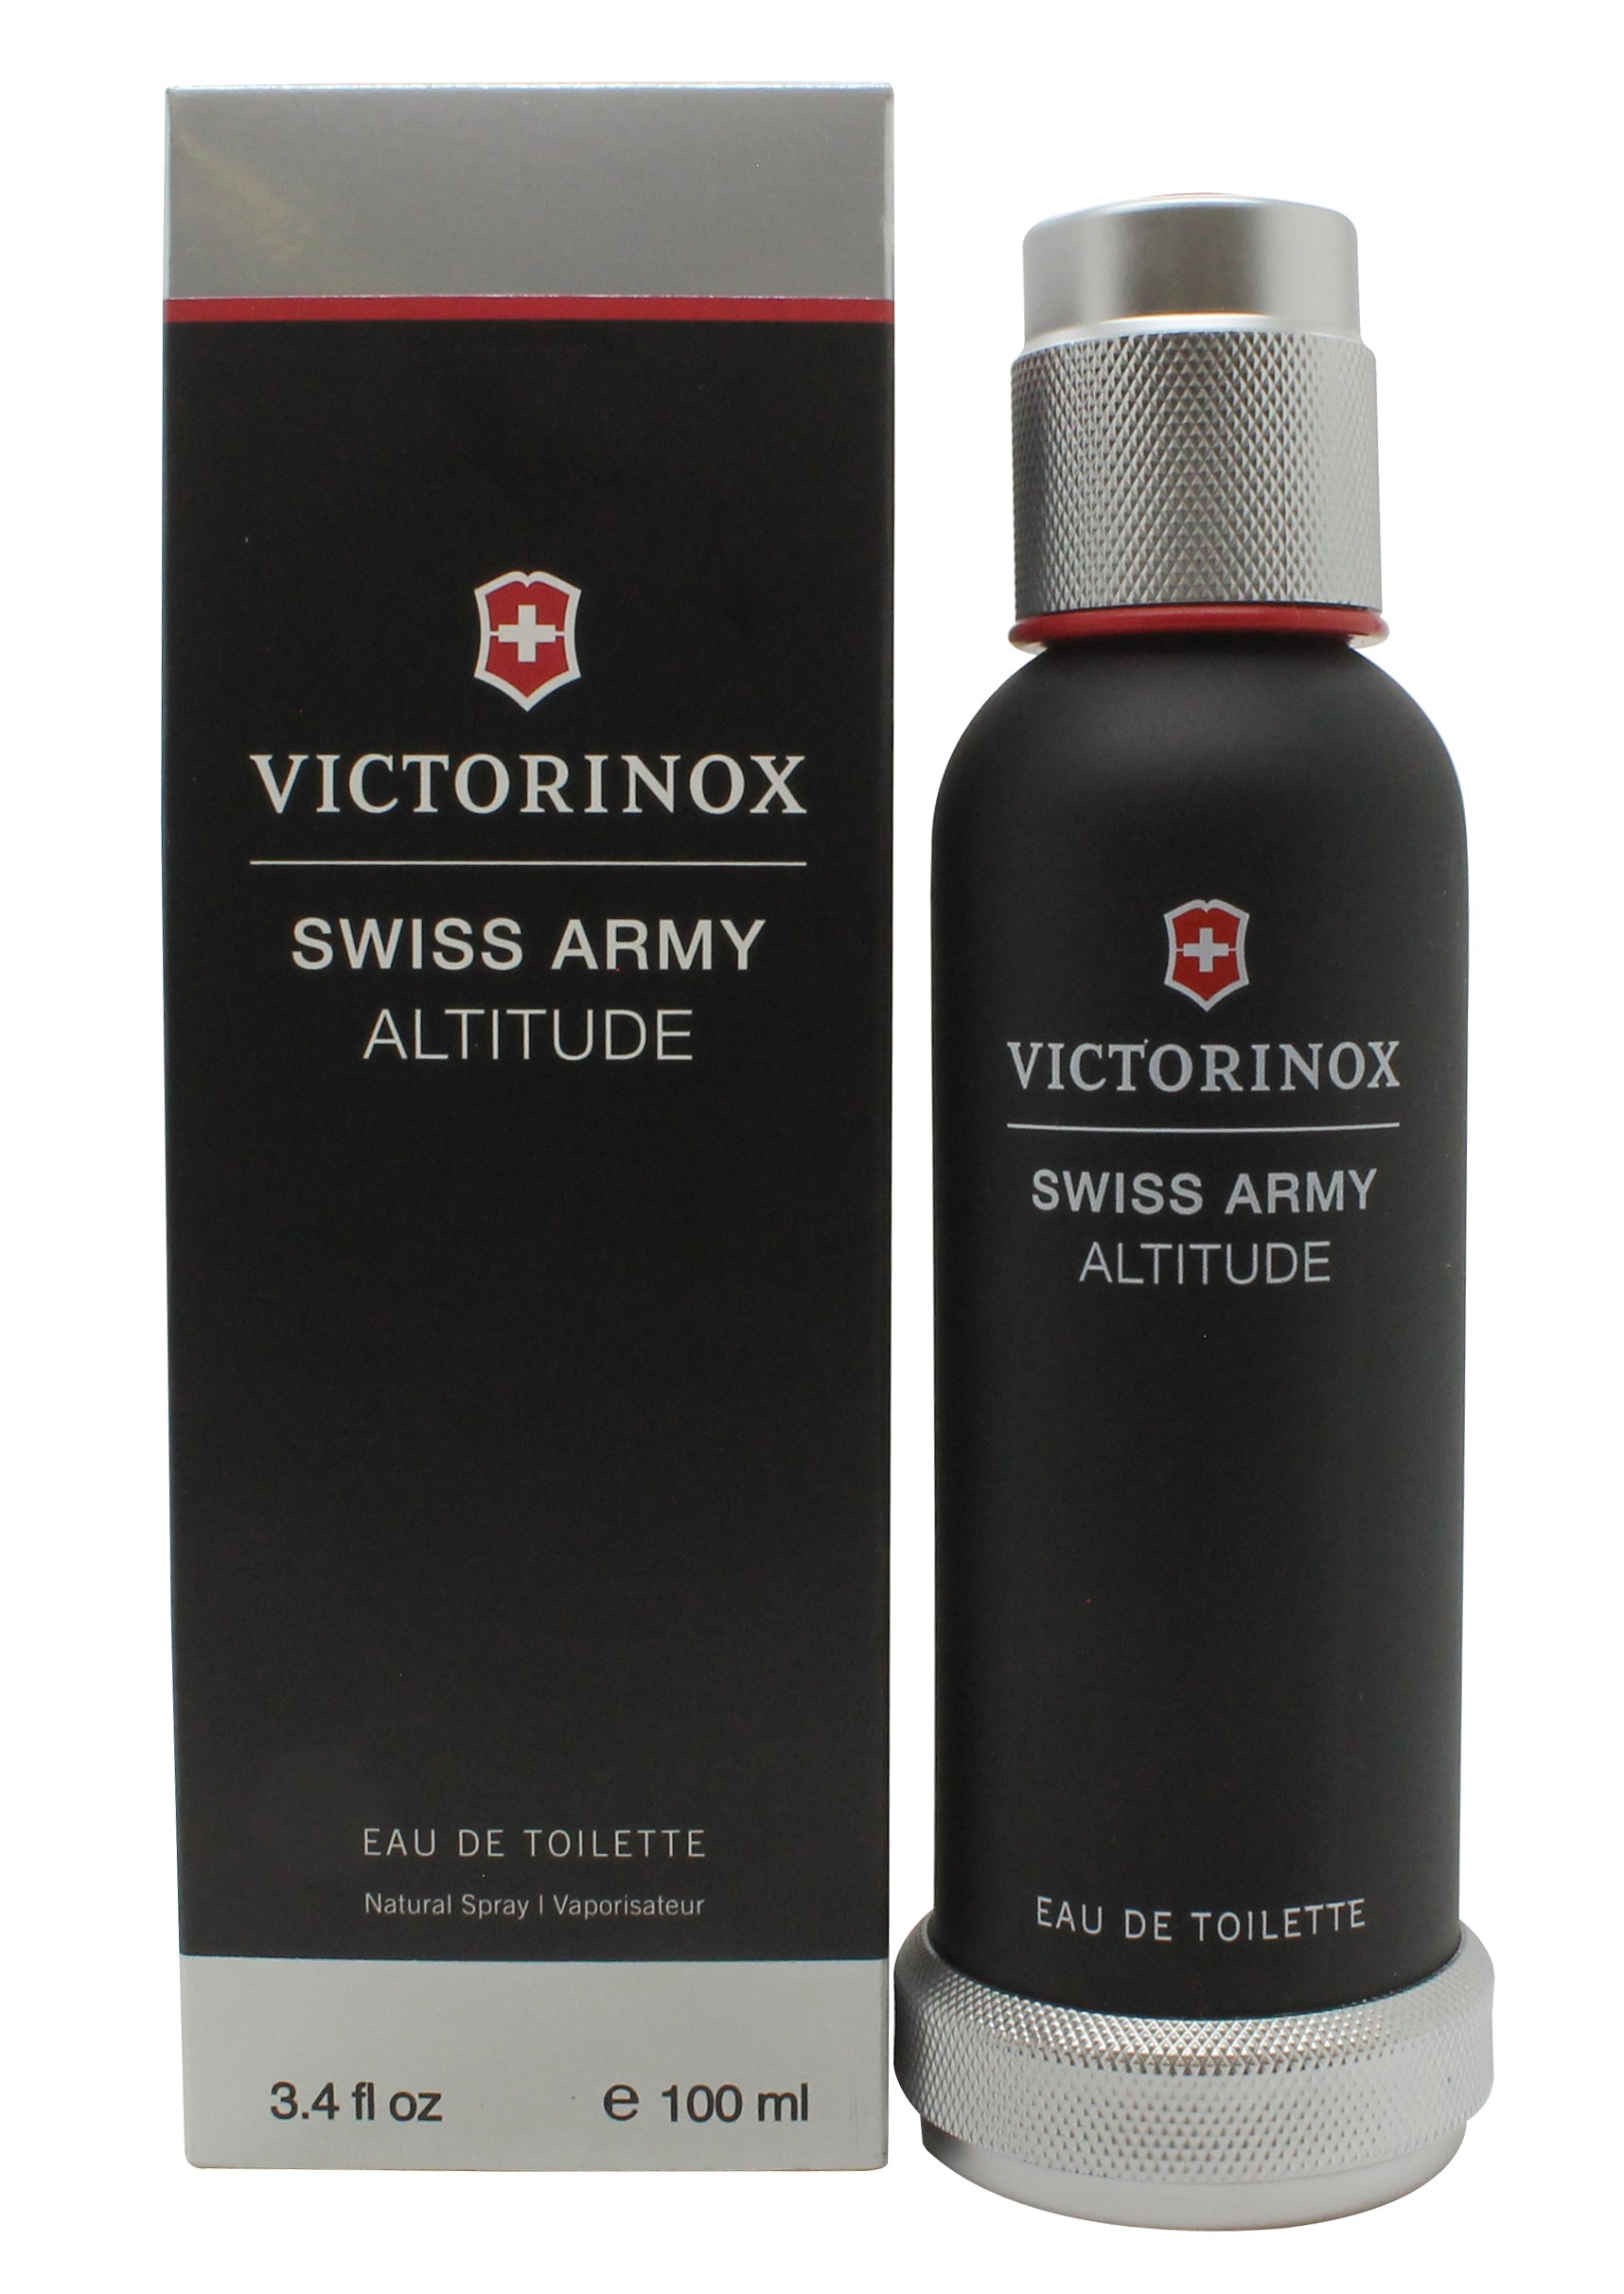 View Swiss Army Altitude Eau de Toilette 100ml Spray information